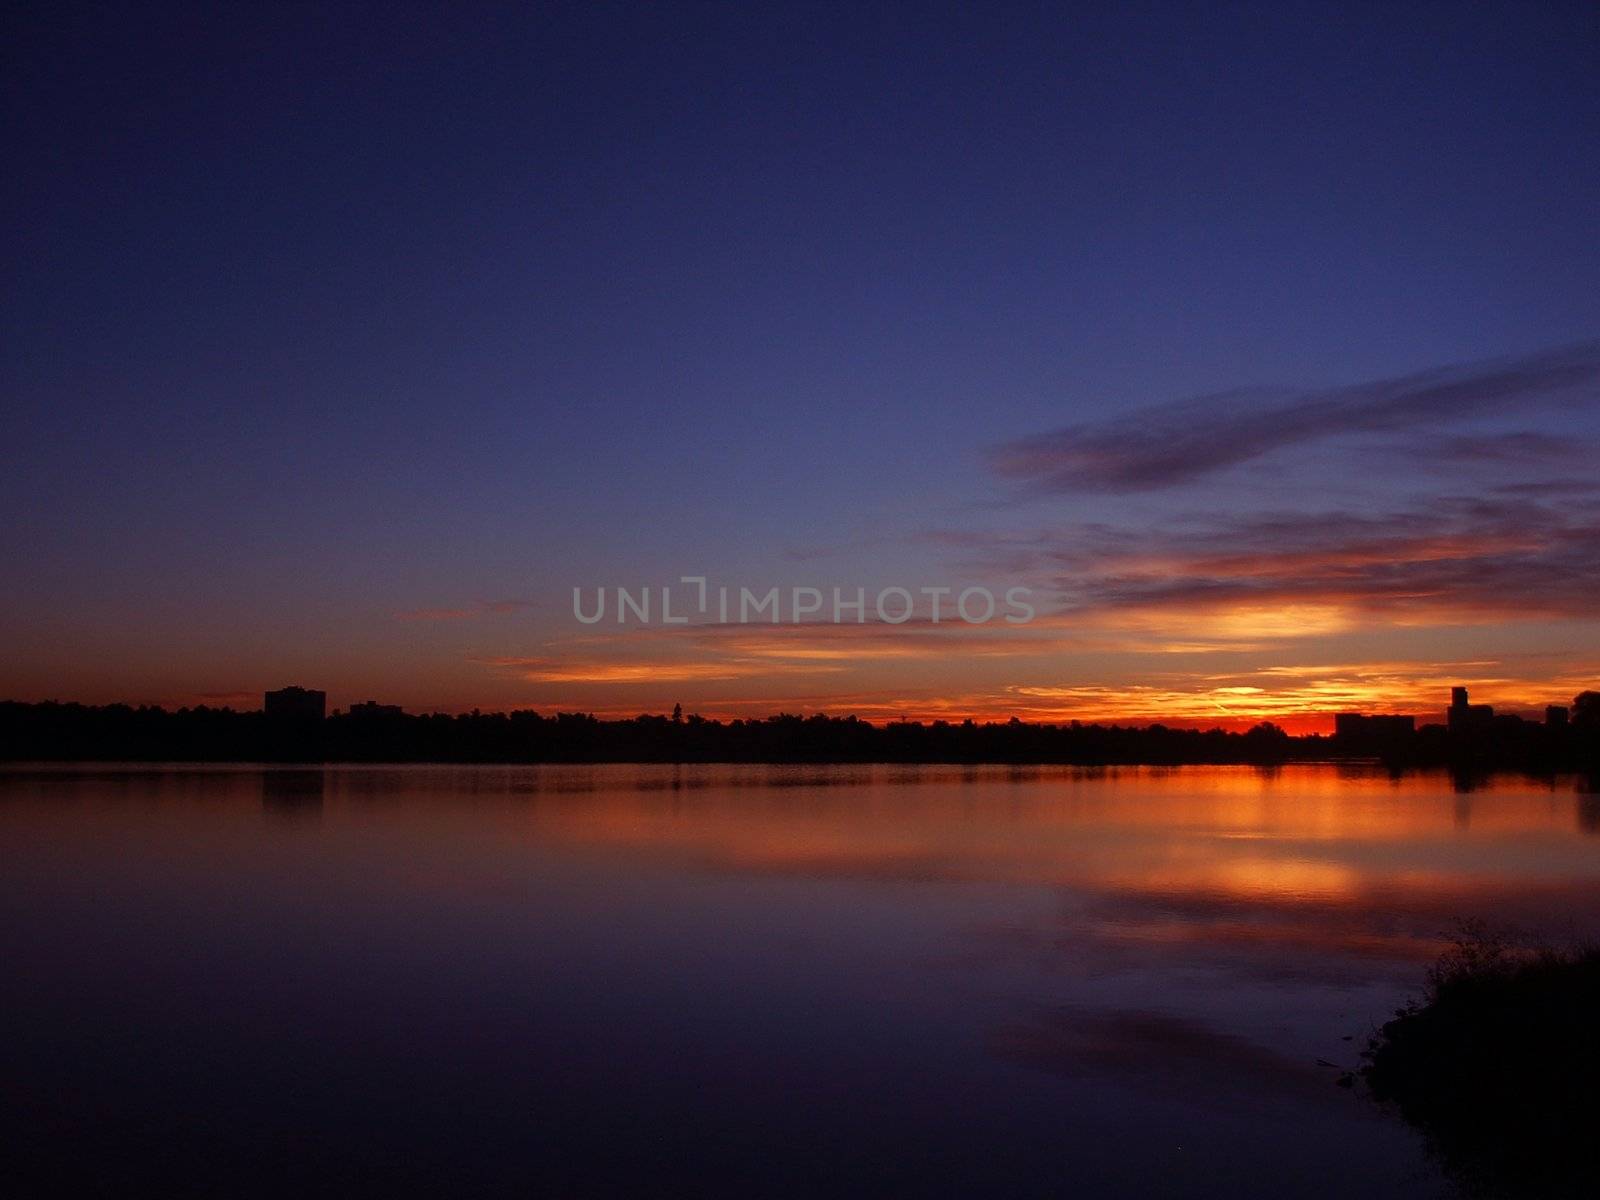 Sunrise ina  city Park with a Lake by jdebordphoto